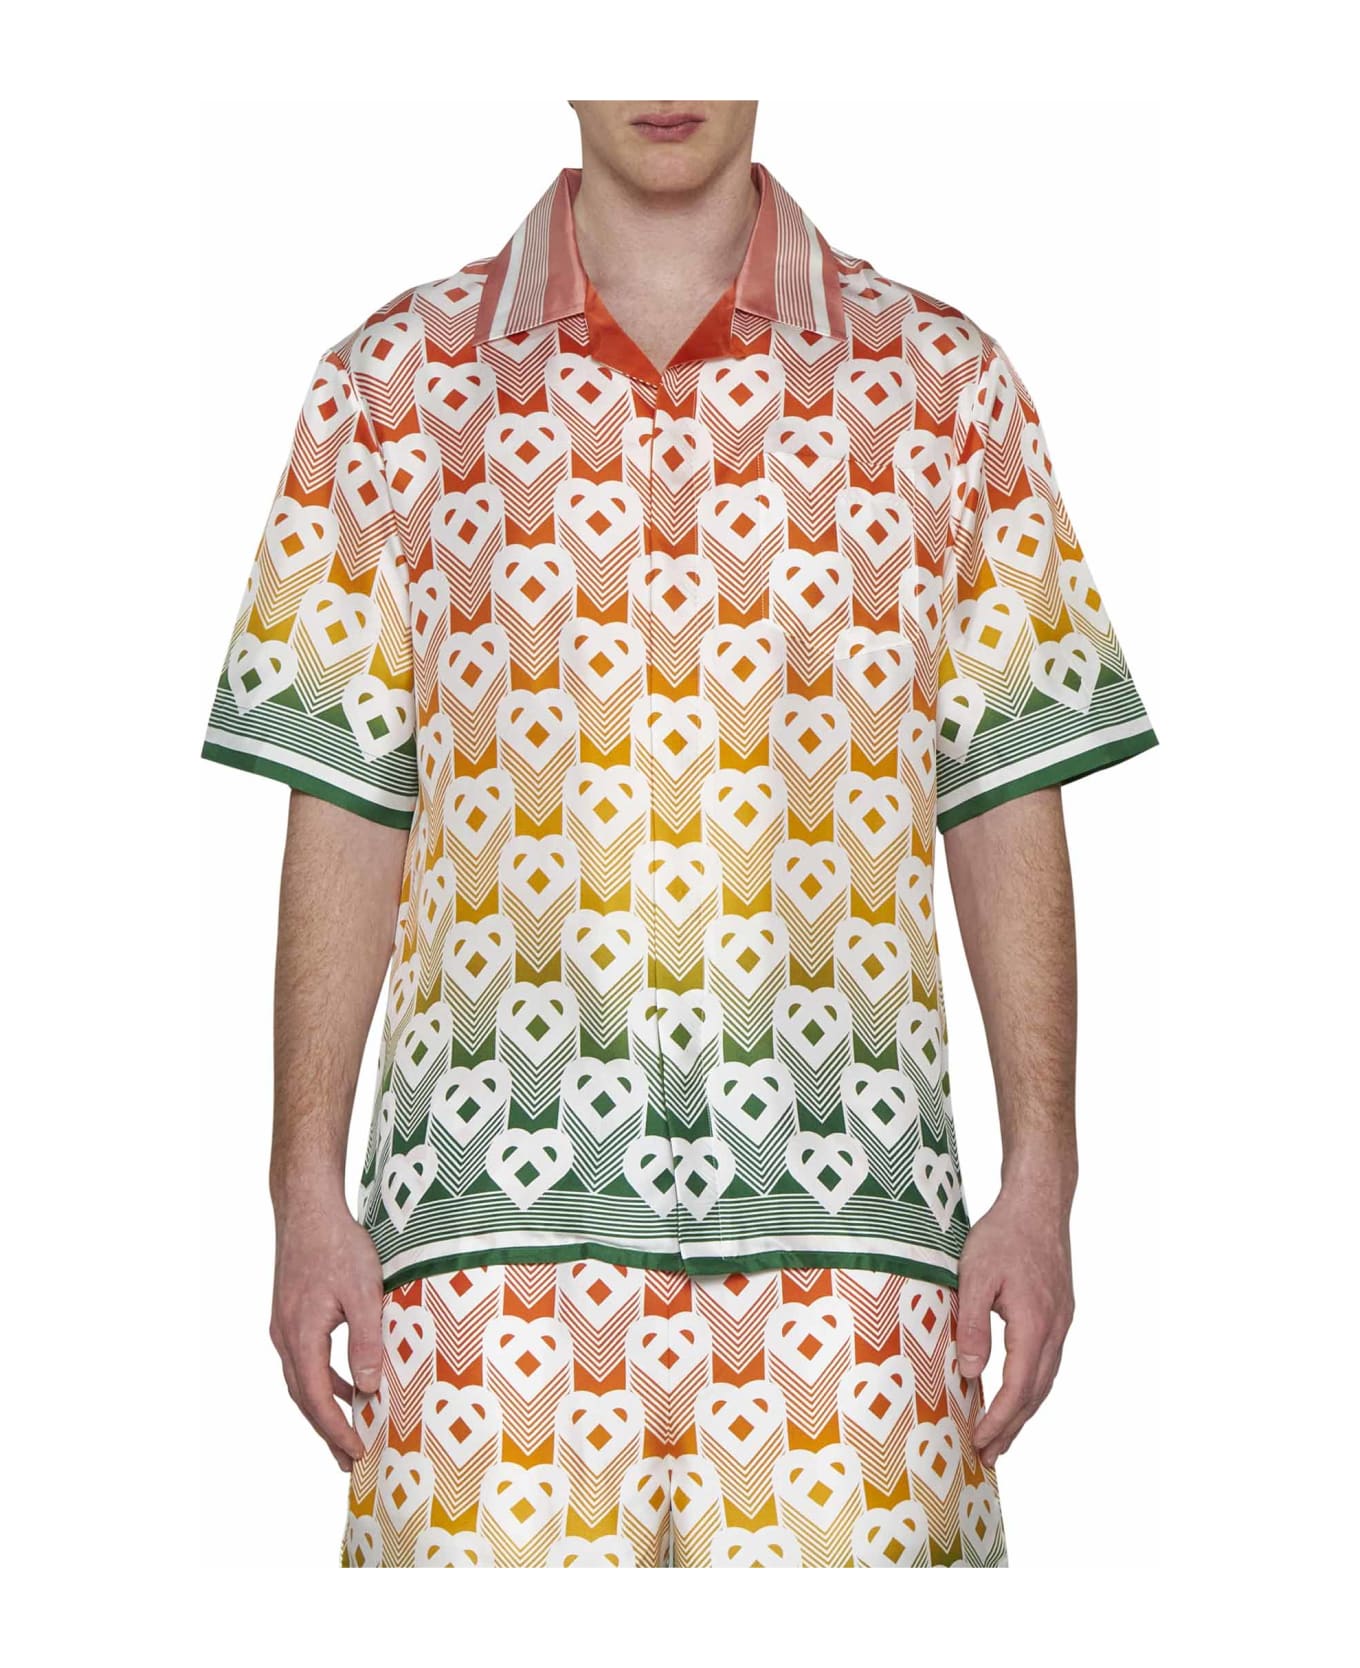 Casablanca Gradient Heart Monogram Silk Shirt - Multicolour